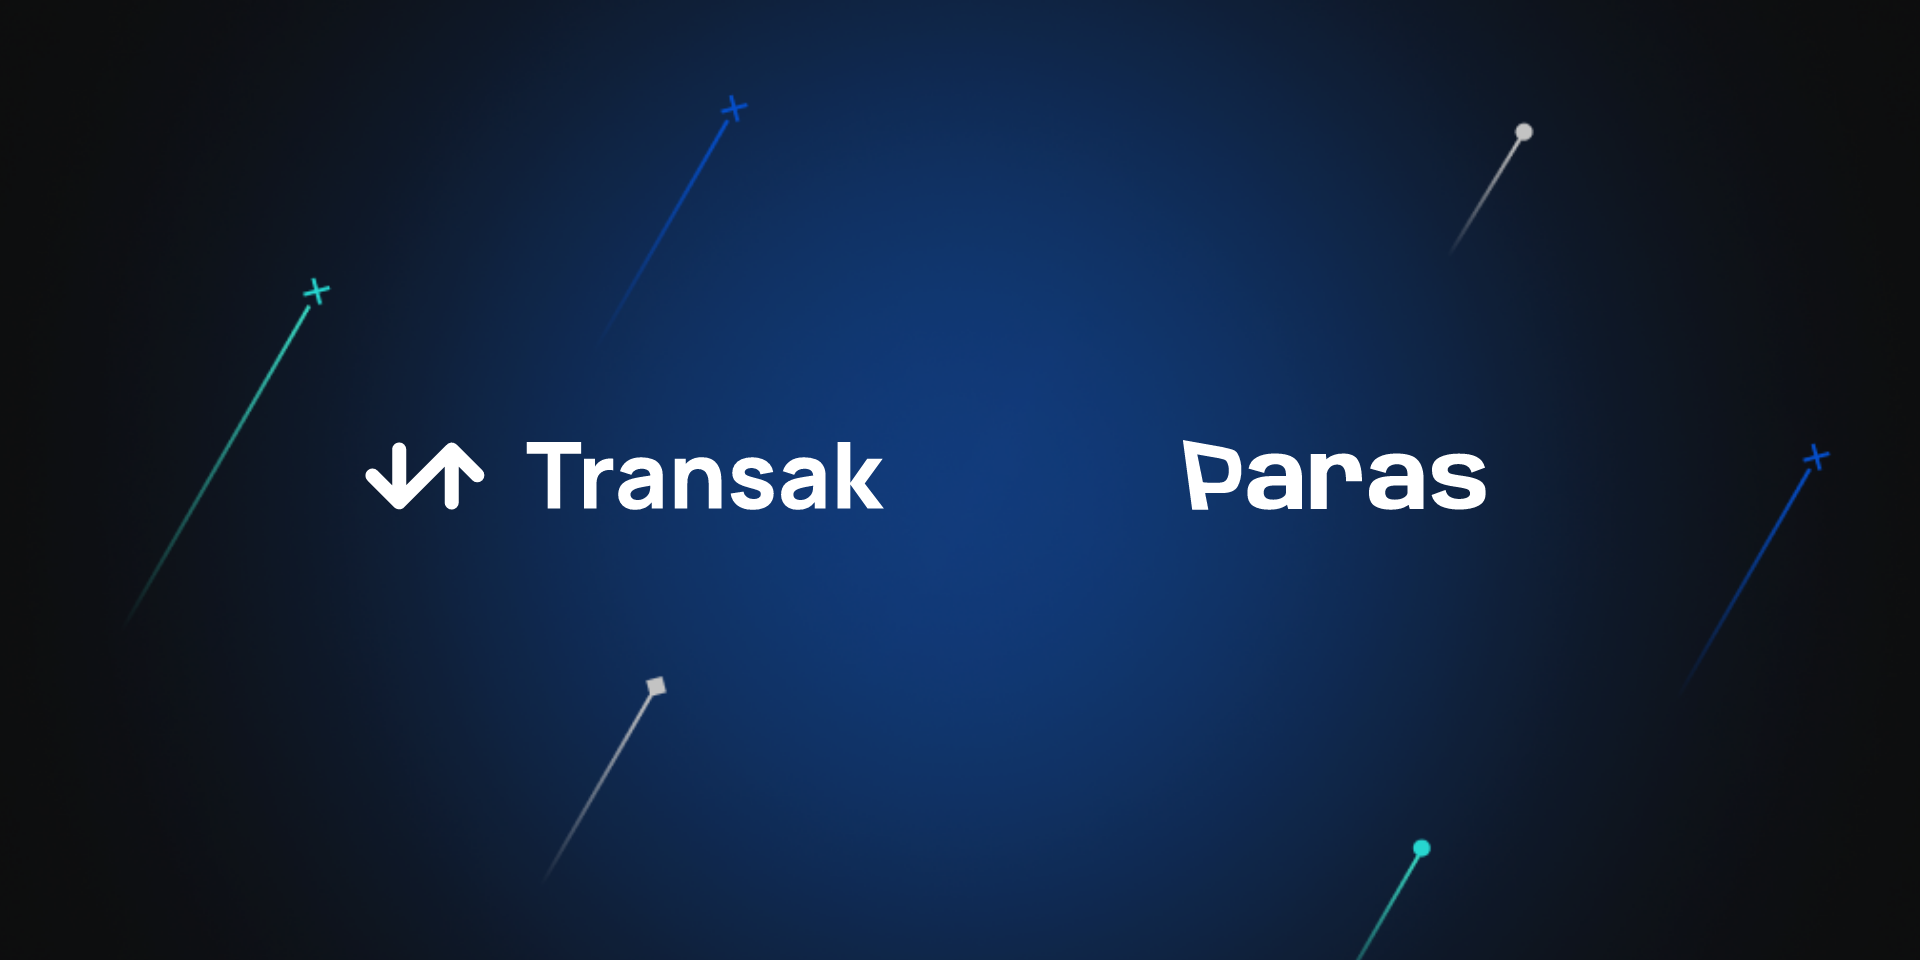 Users can now buy $NEAR on Paras.id via Transak